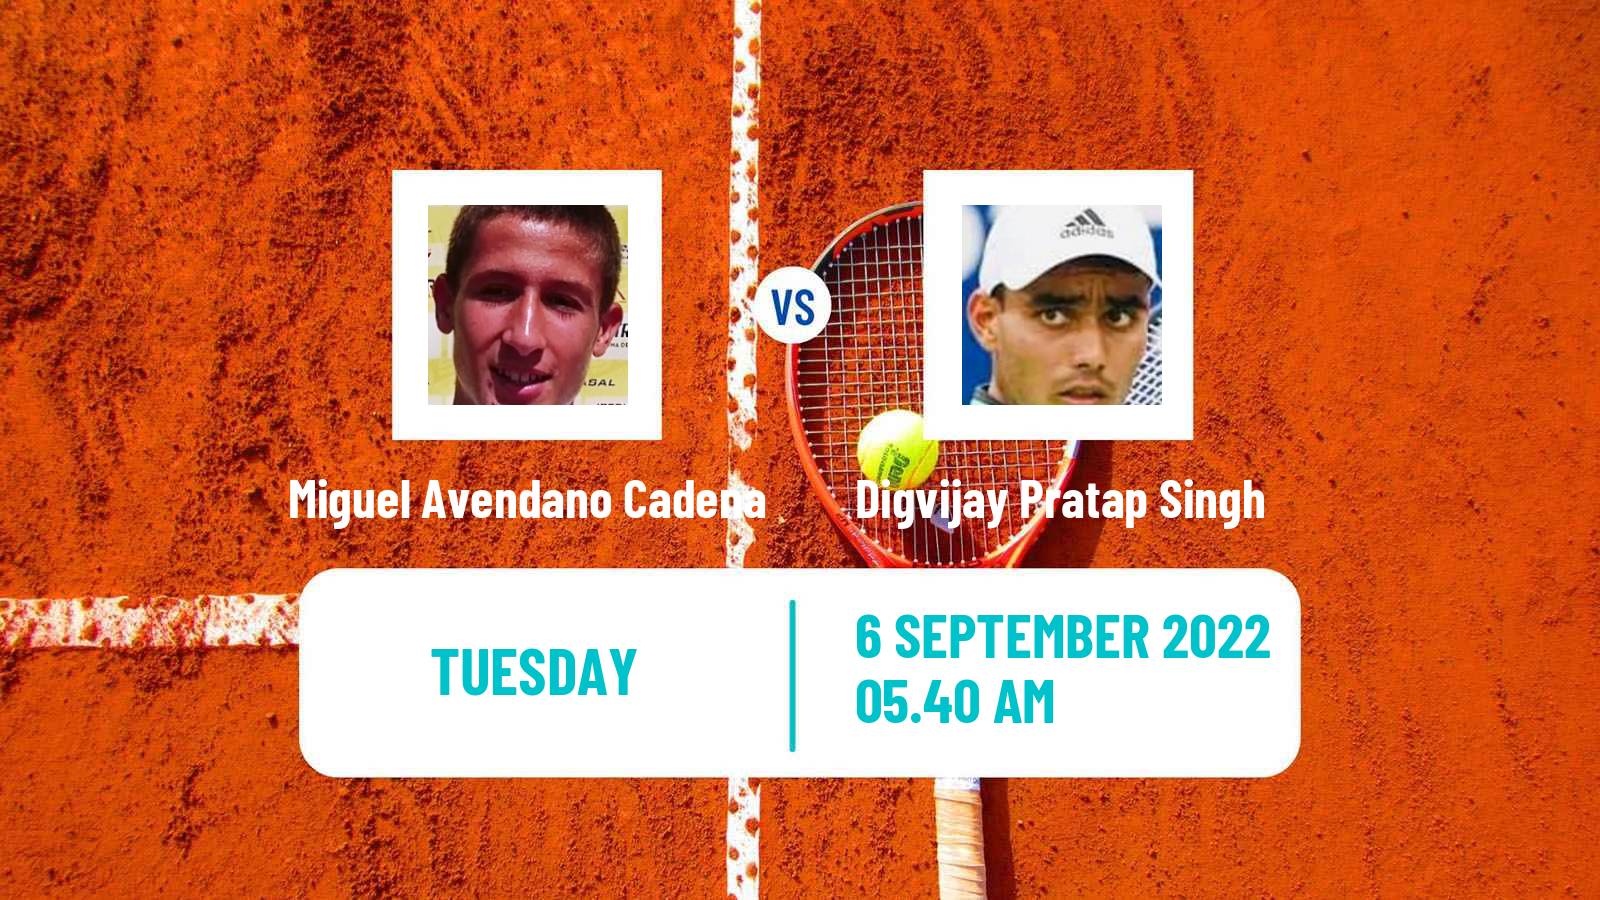 Tennis ITF Tournaments Miguel Avendano Cadena - Digvijay Pratap Singh